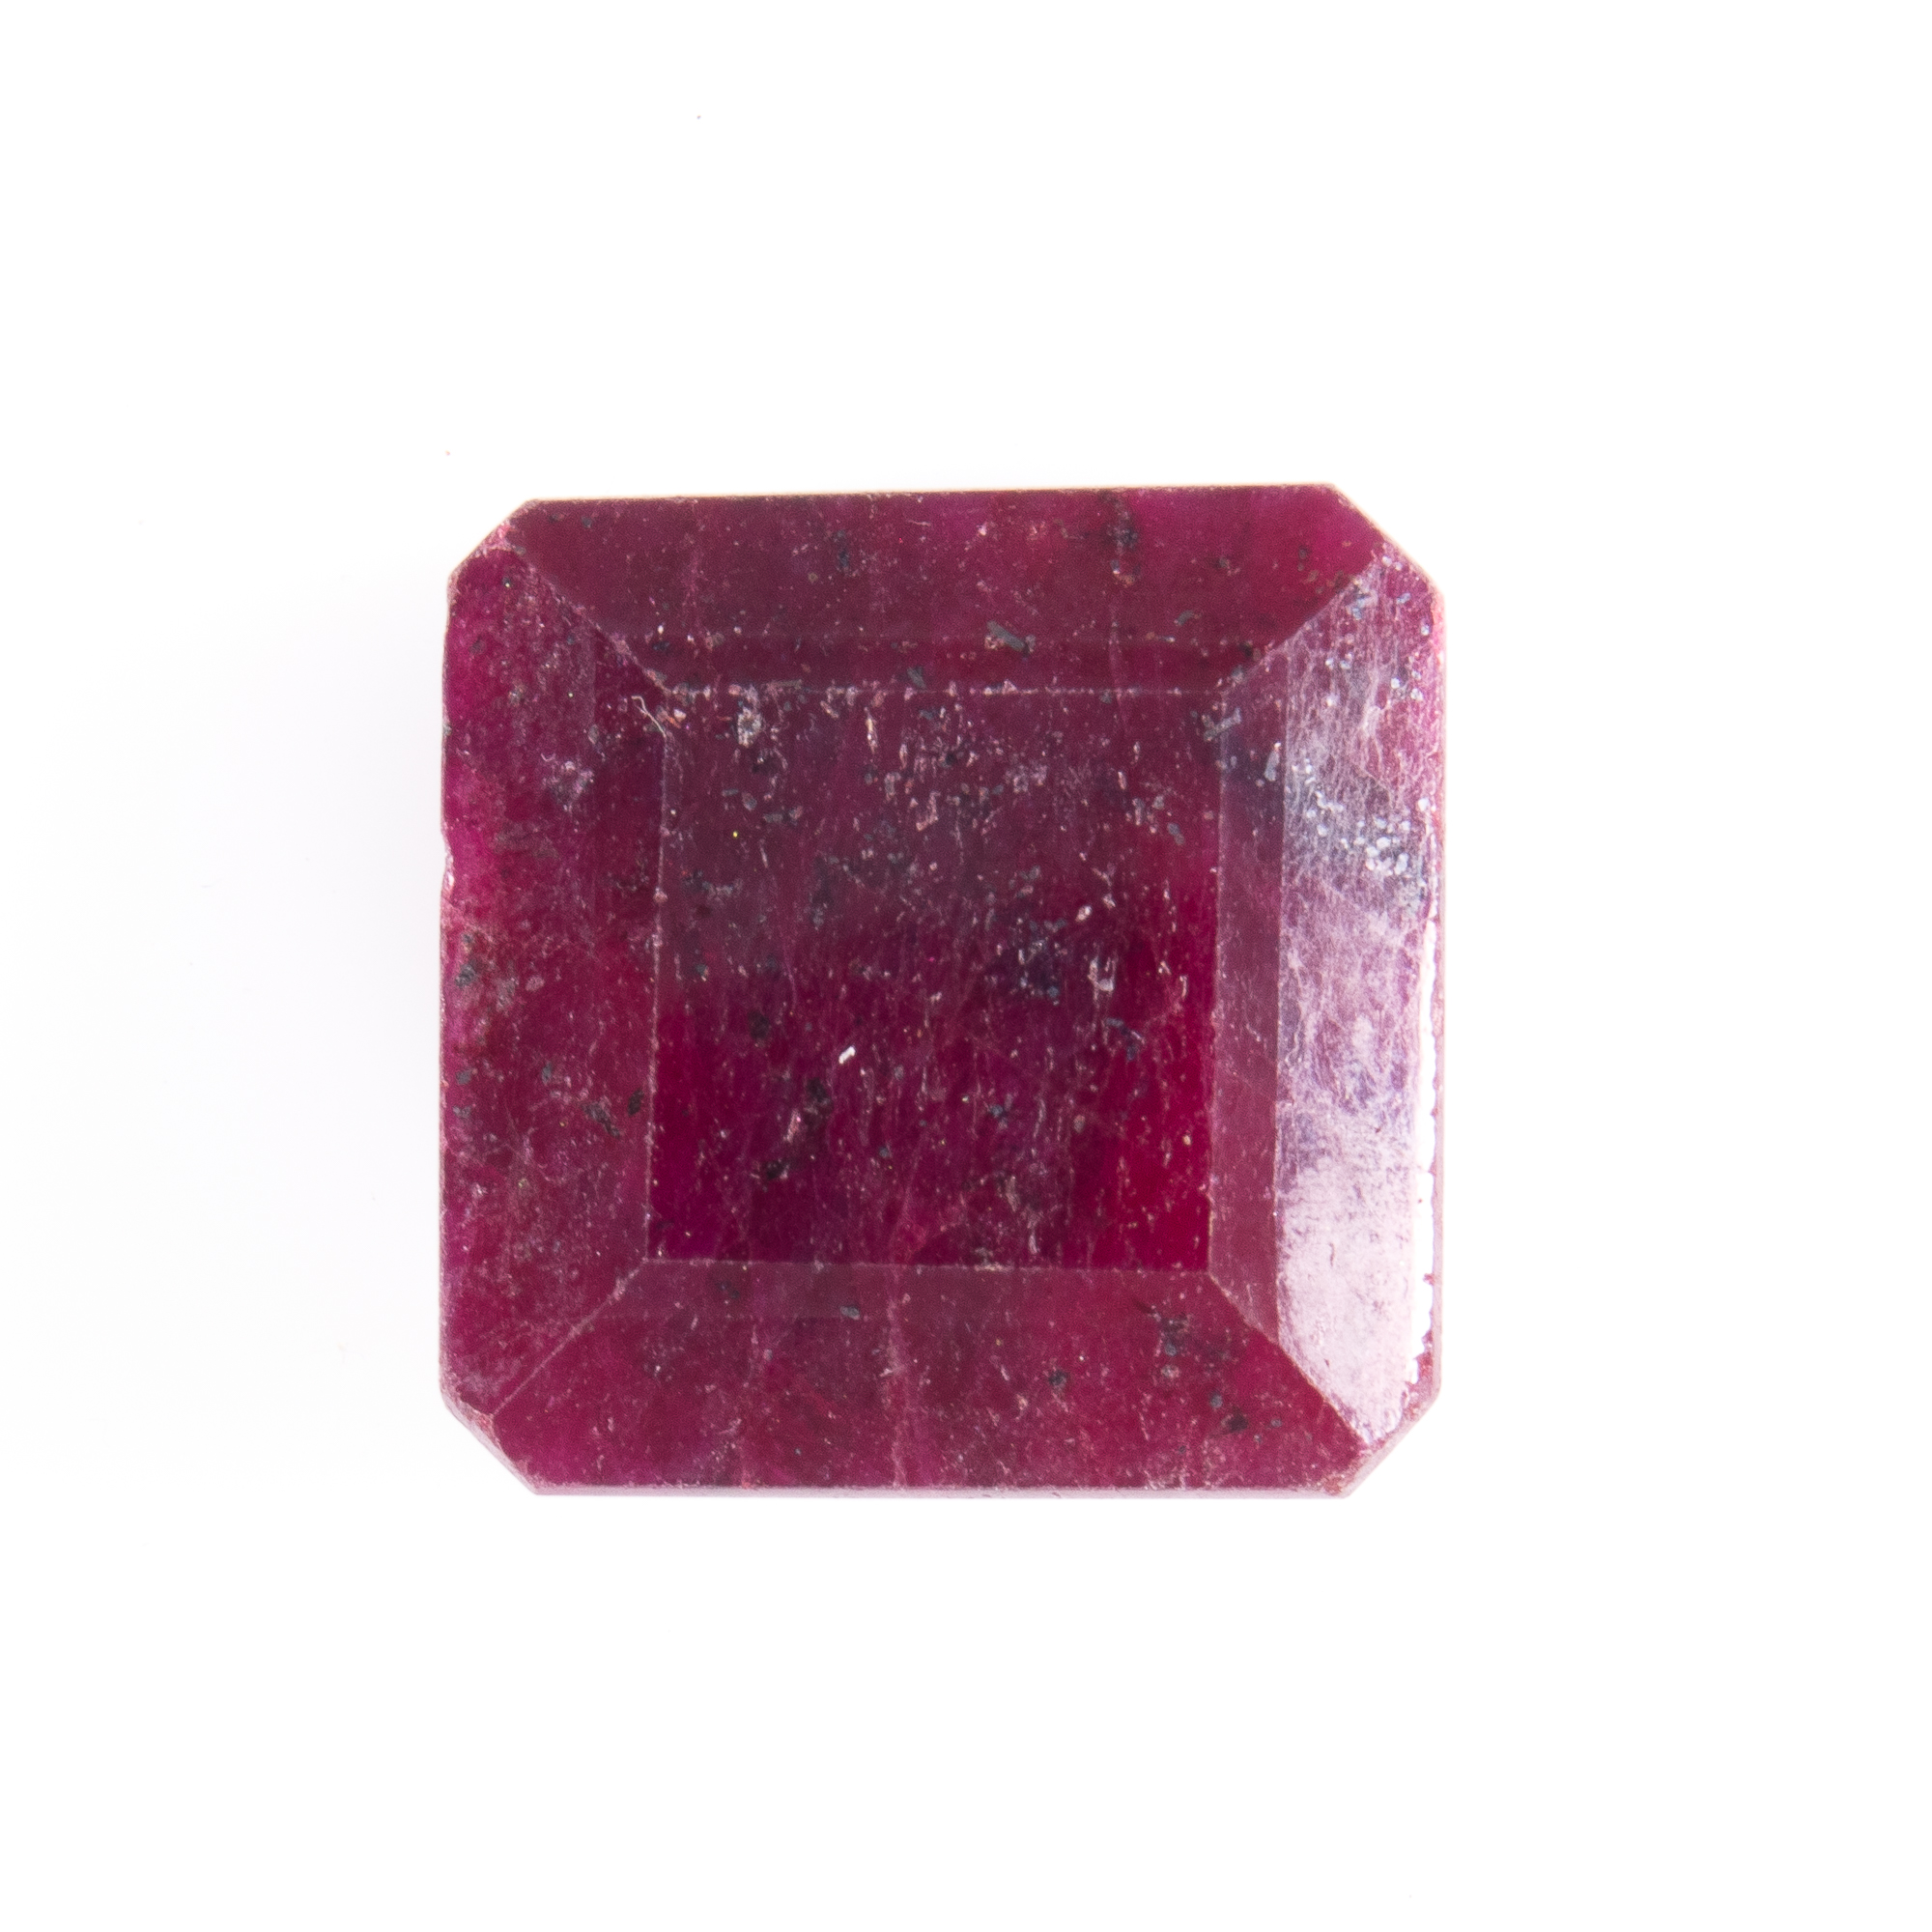 127ct Ruby Gemstone - Image 7 of 7